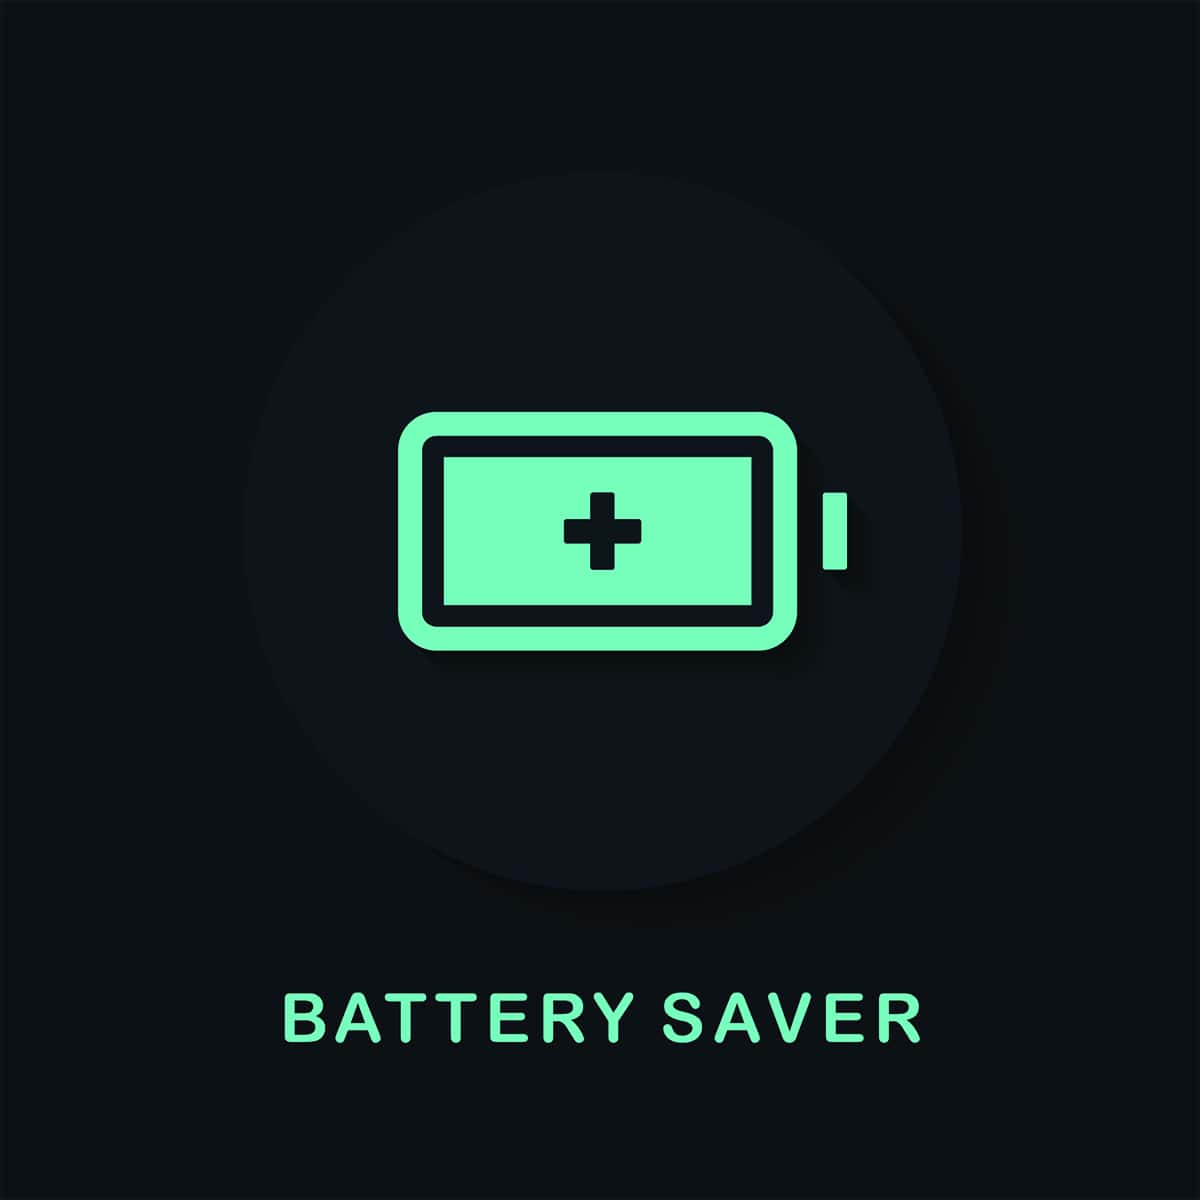 A Breakdown of the ‘Battery Saver’ Alert